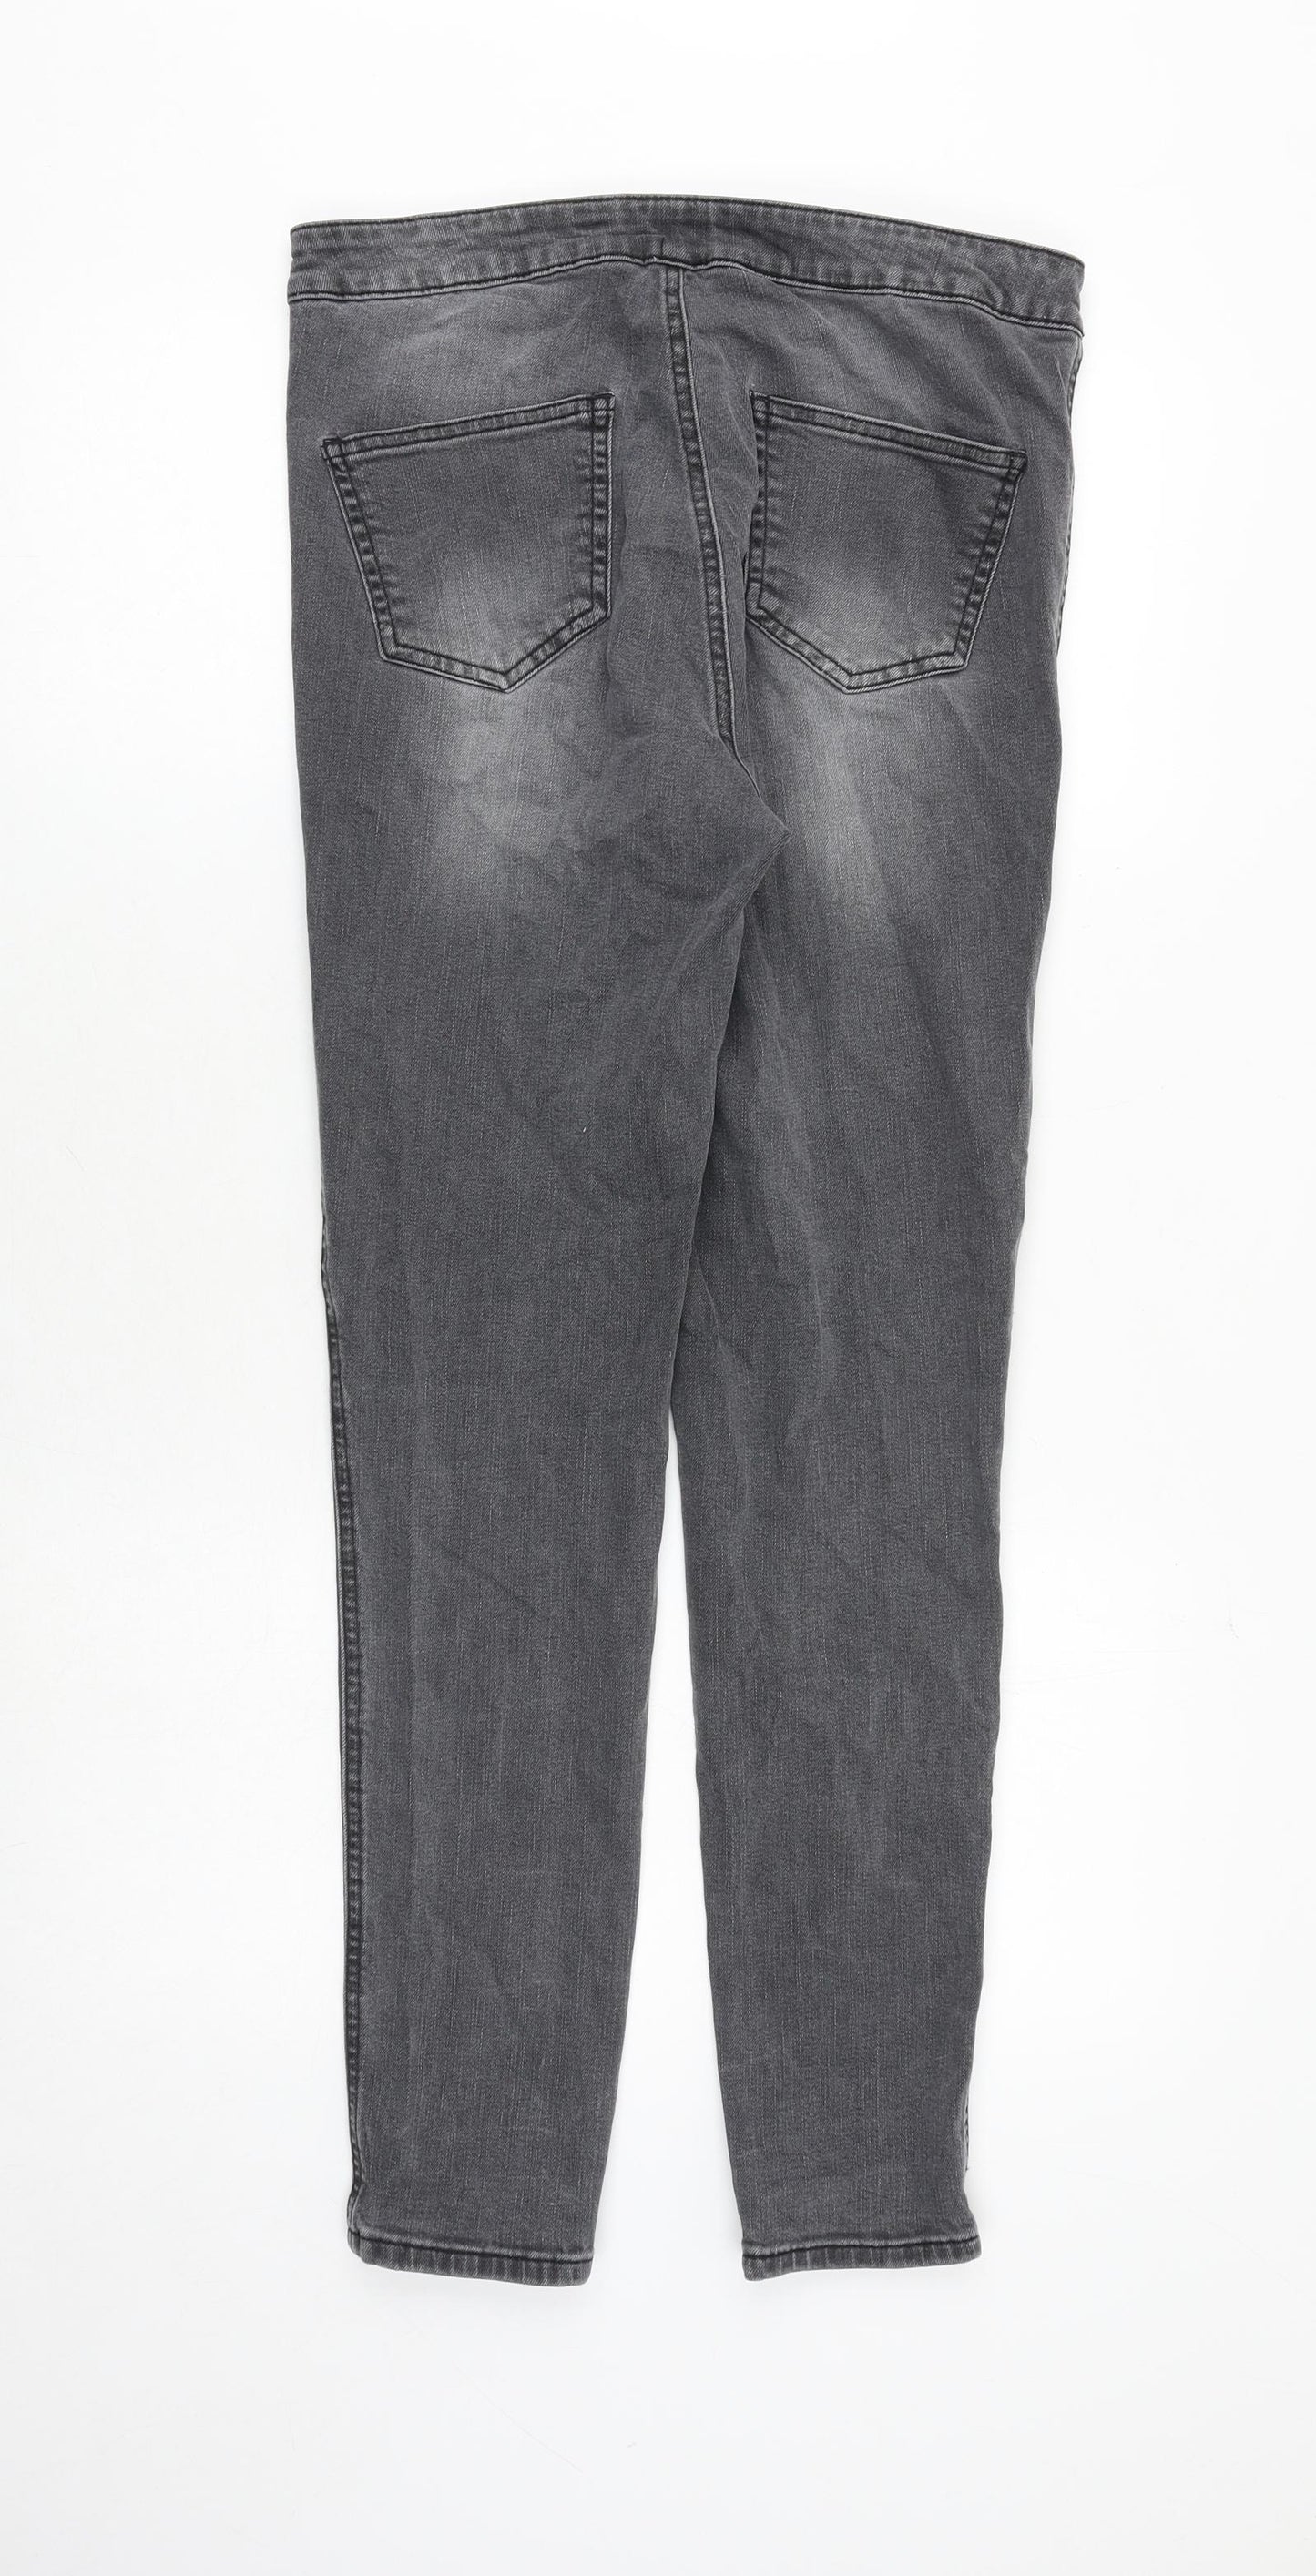 Waredenim Womens Grey Cotton Skinny Jeans Size 14 Regular Zip